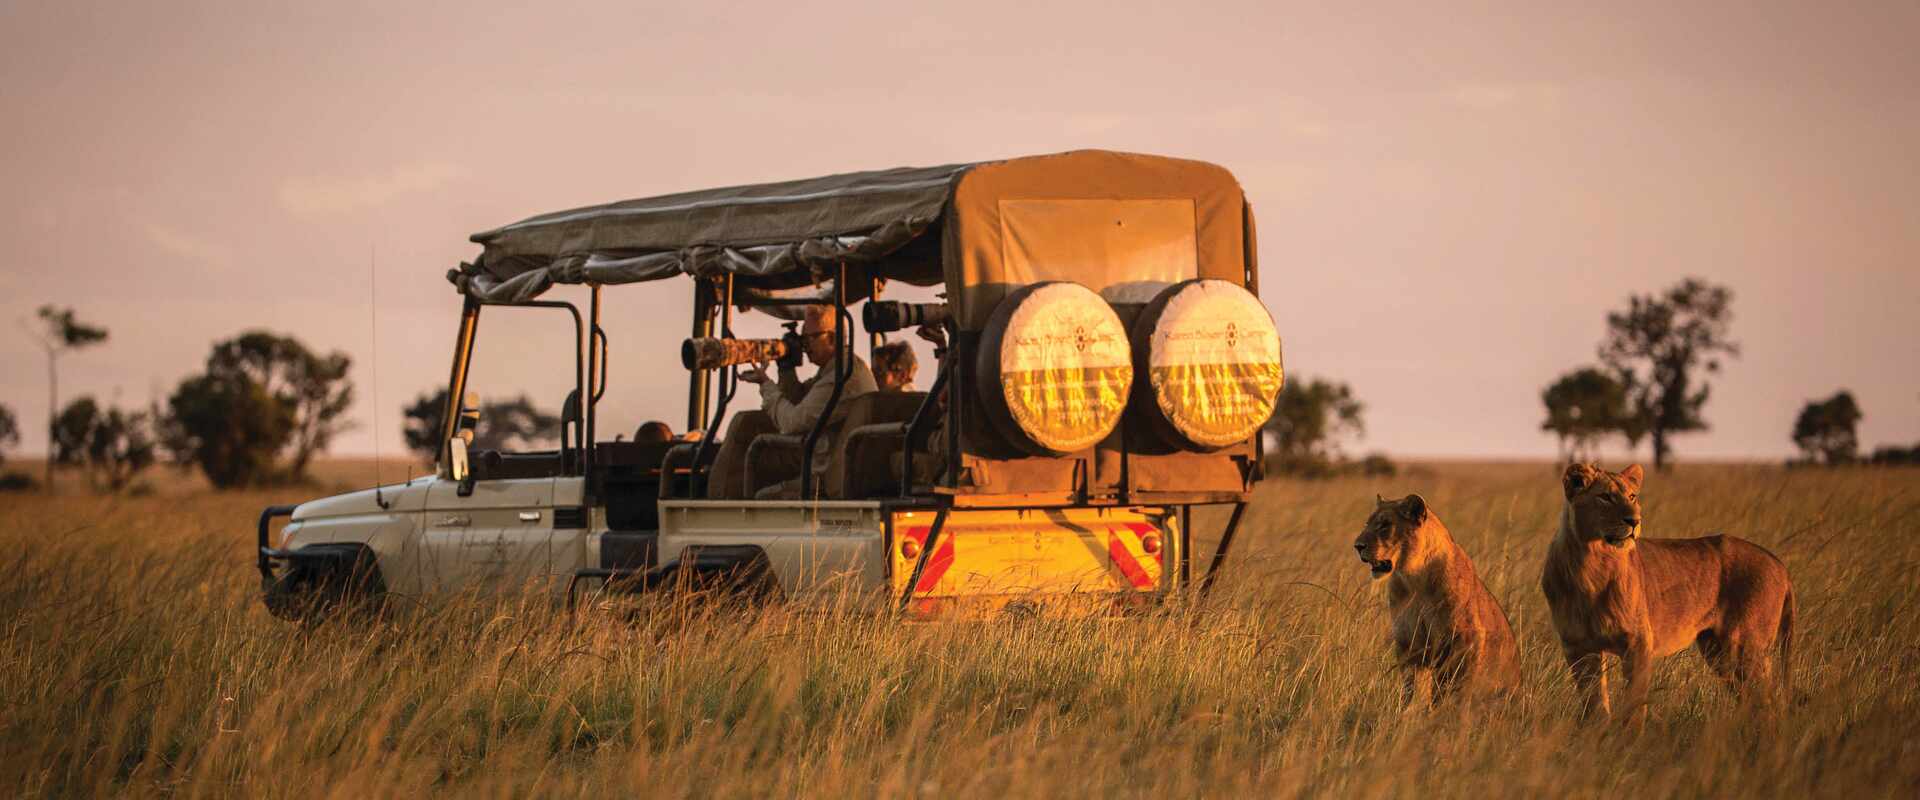 sunset game drive lions karen blixen camp, kenya